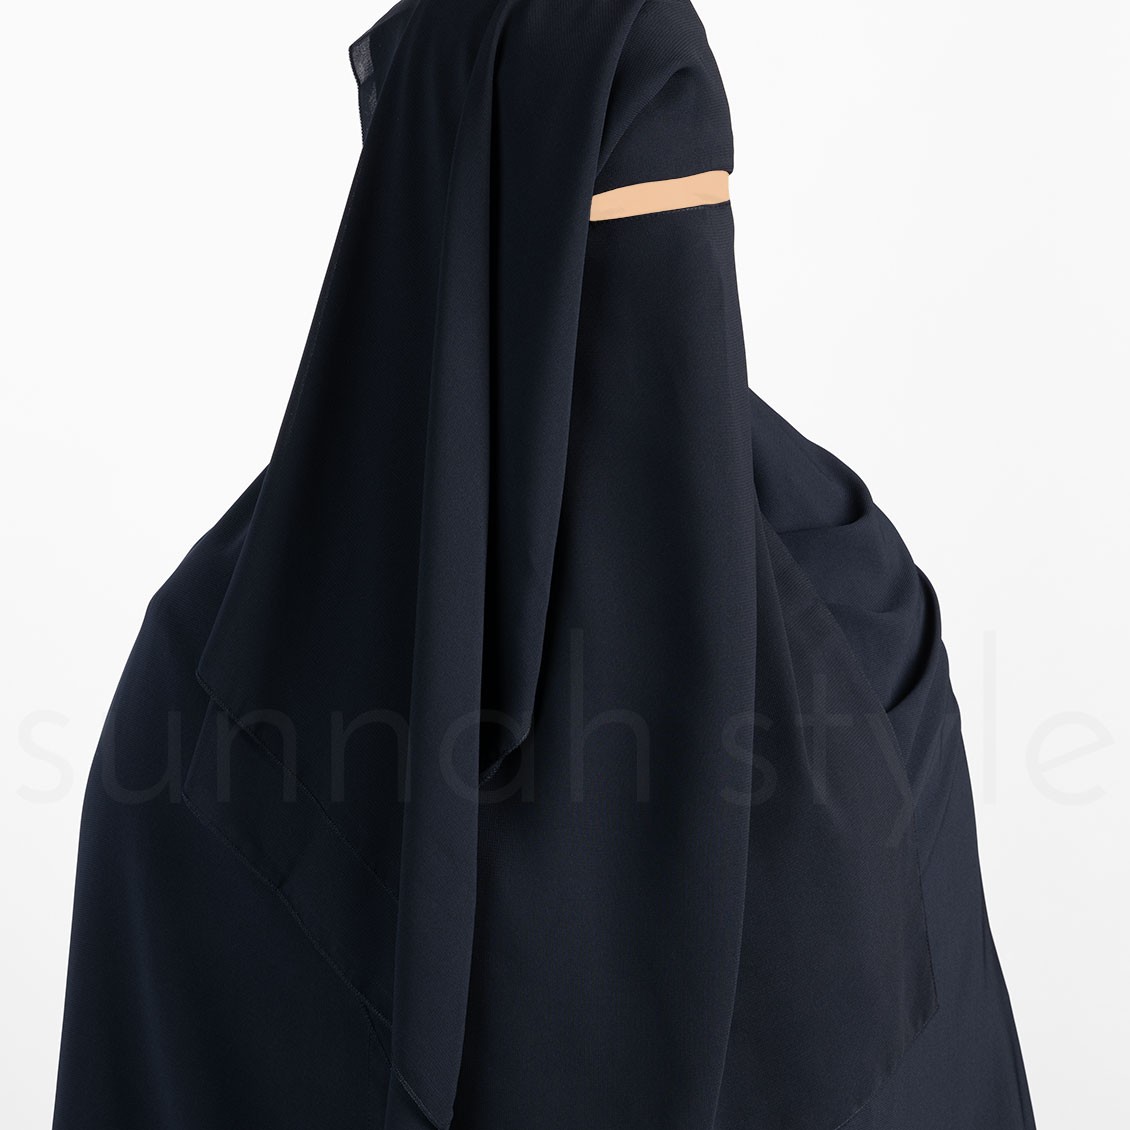 Sunnah Style Three Layer Niqab Navy Blue